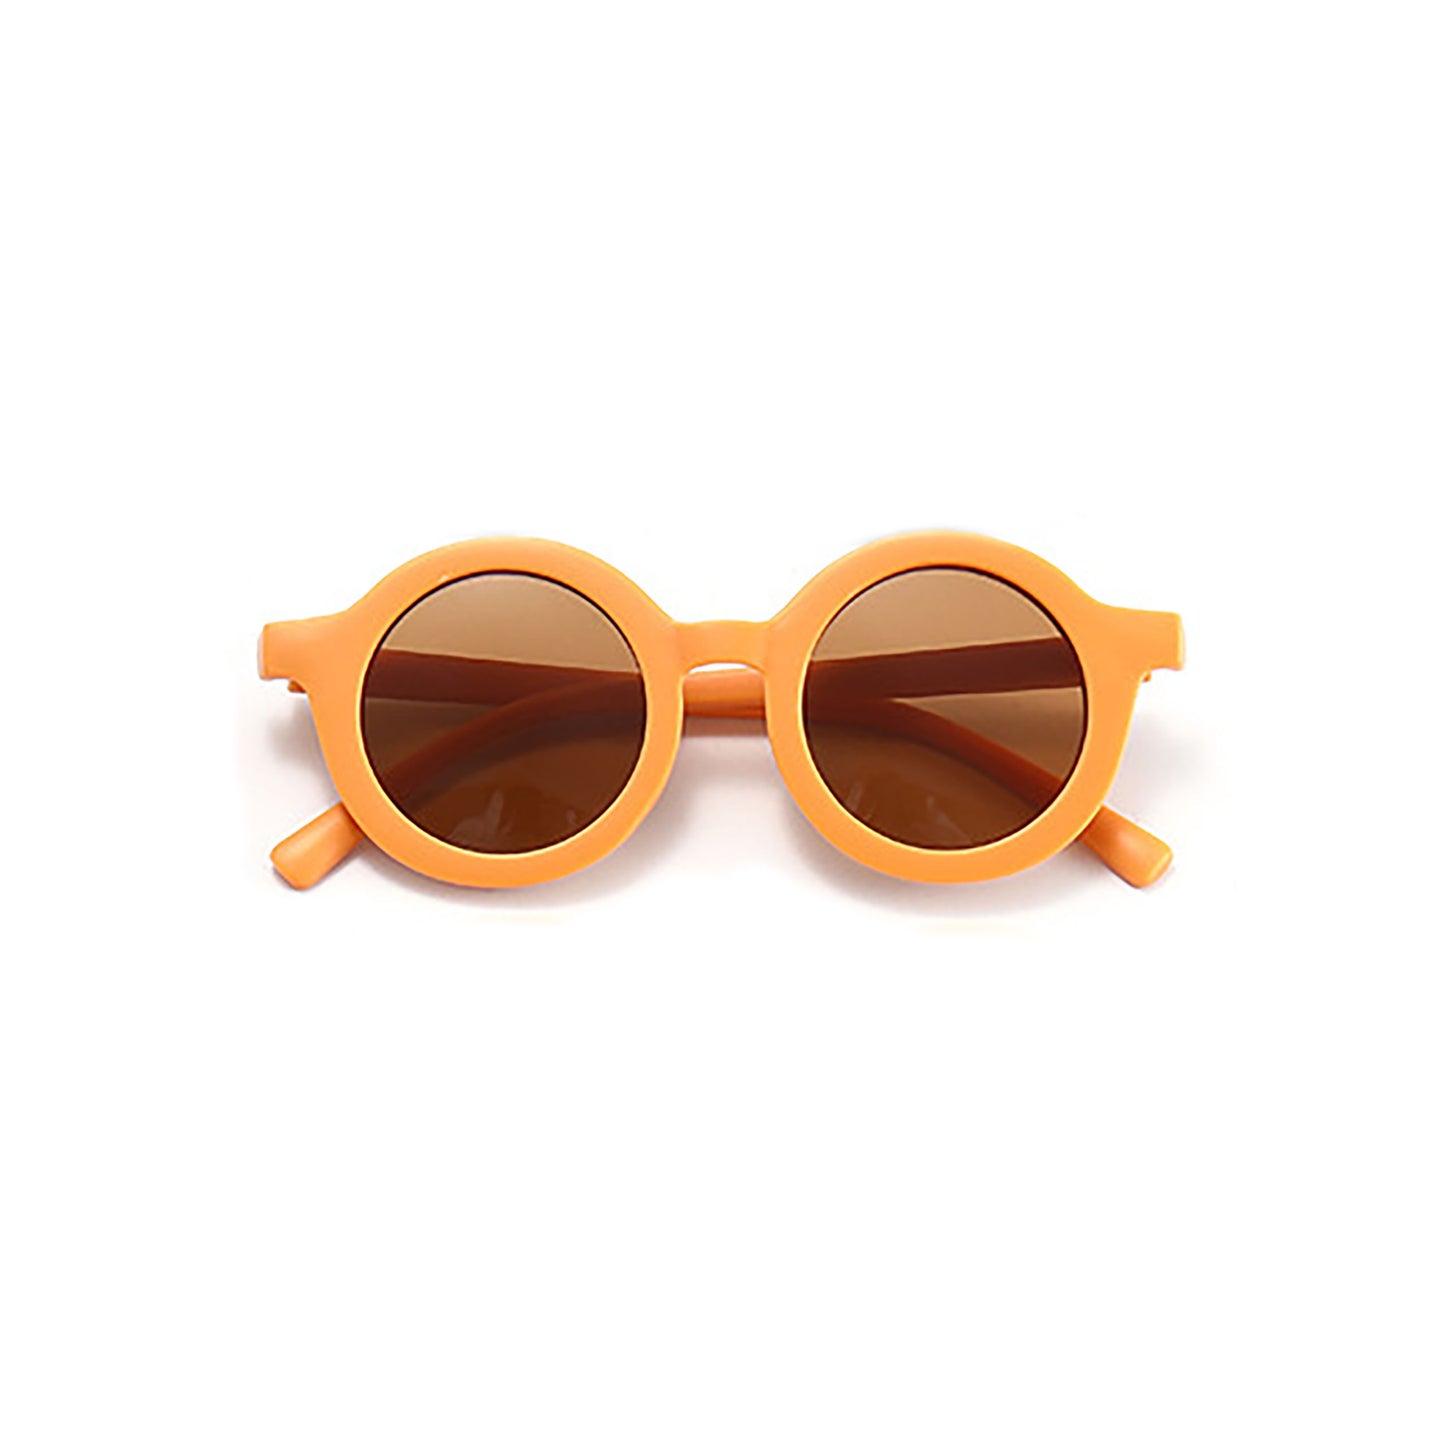 Round Retro Sunglasses - Clementine Matte